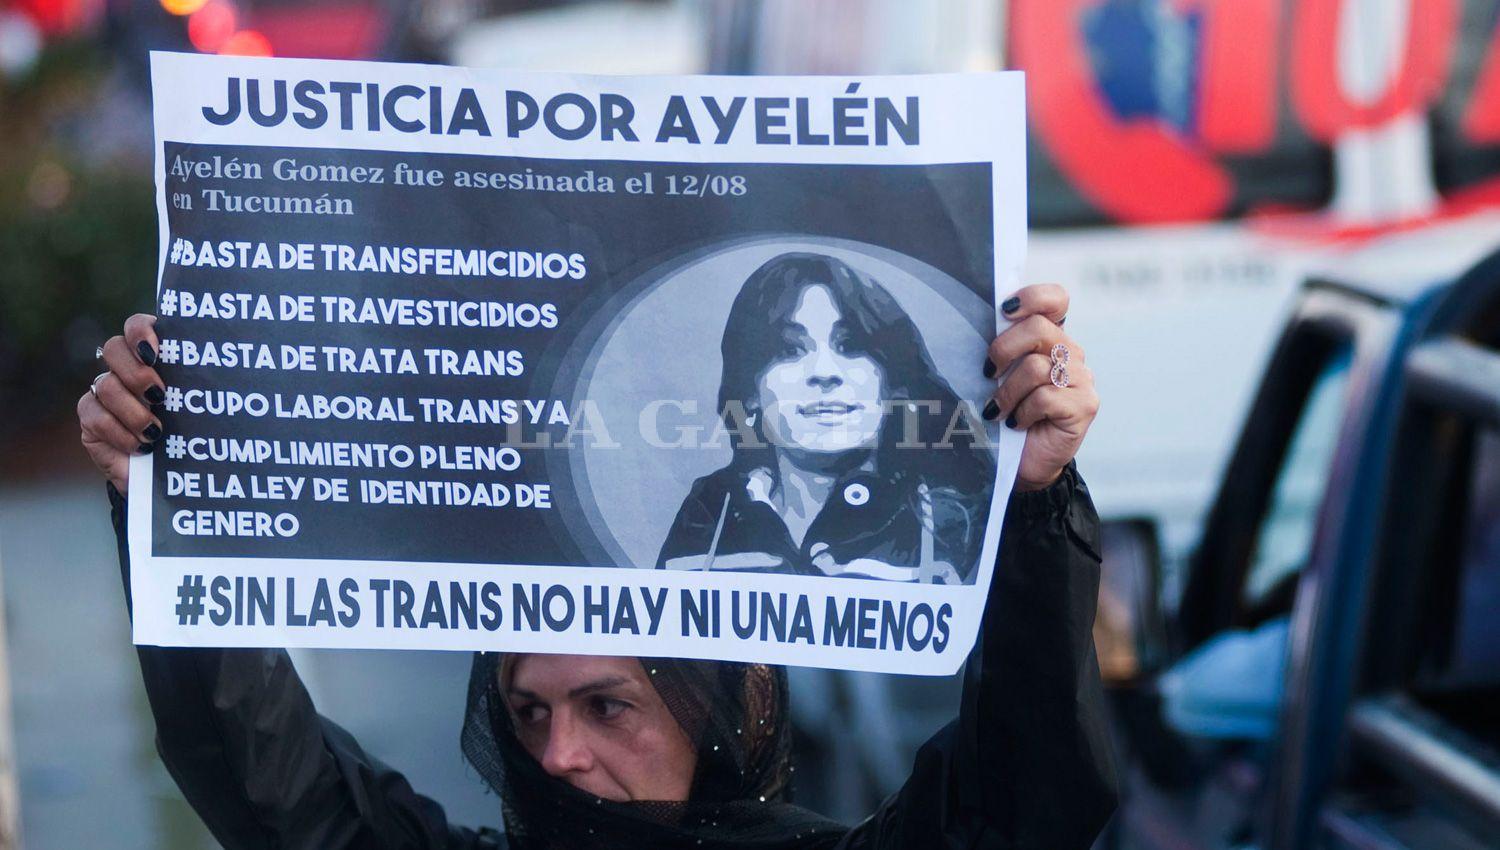 ayelen-gomez-mes-muerte-policiales-tucuman-joven-trans